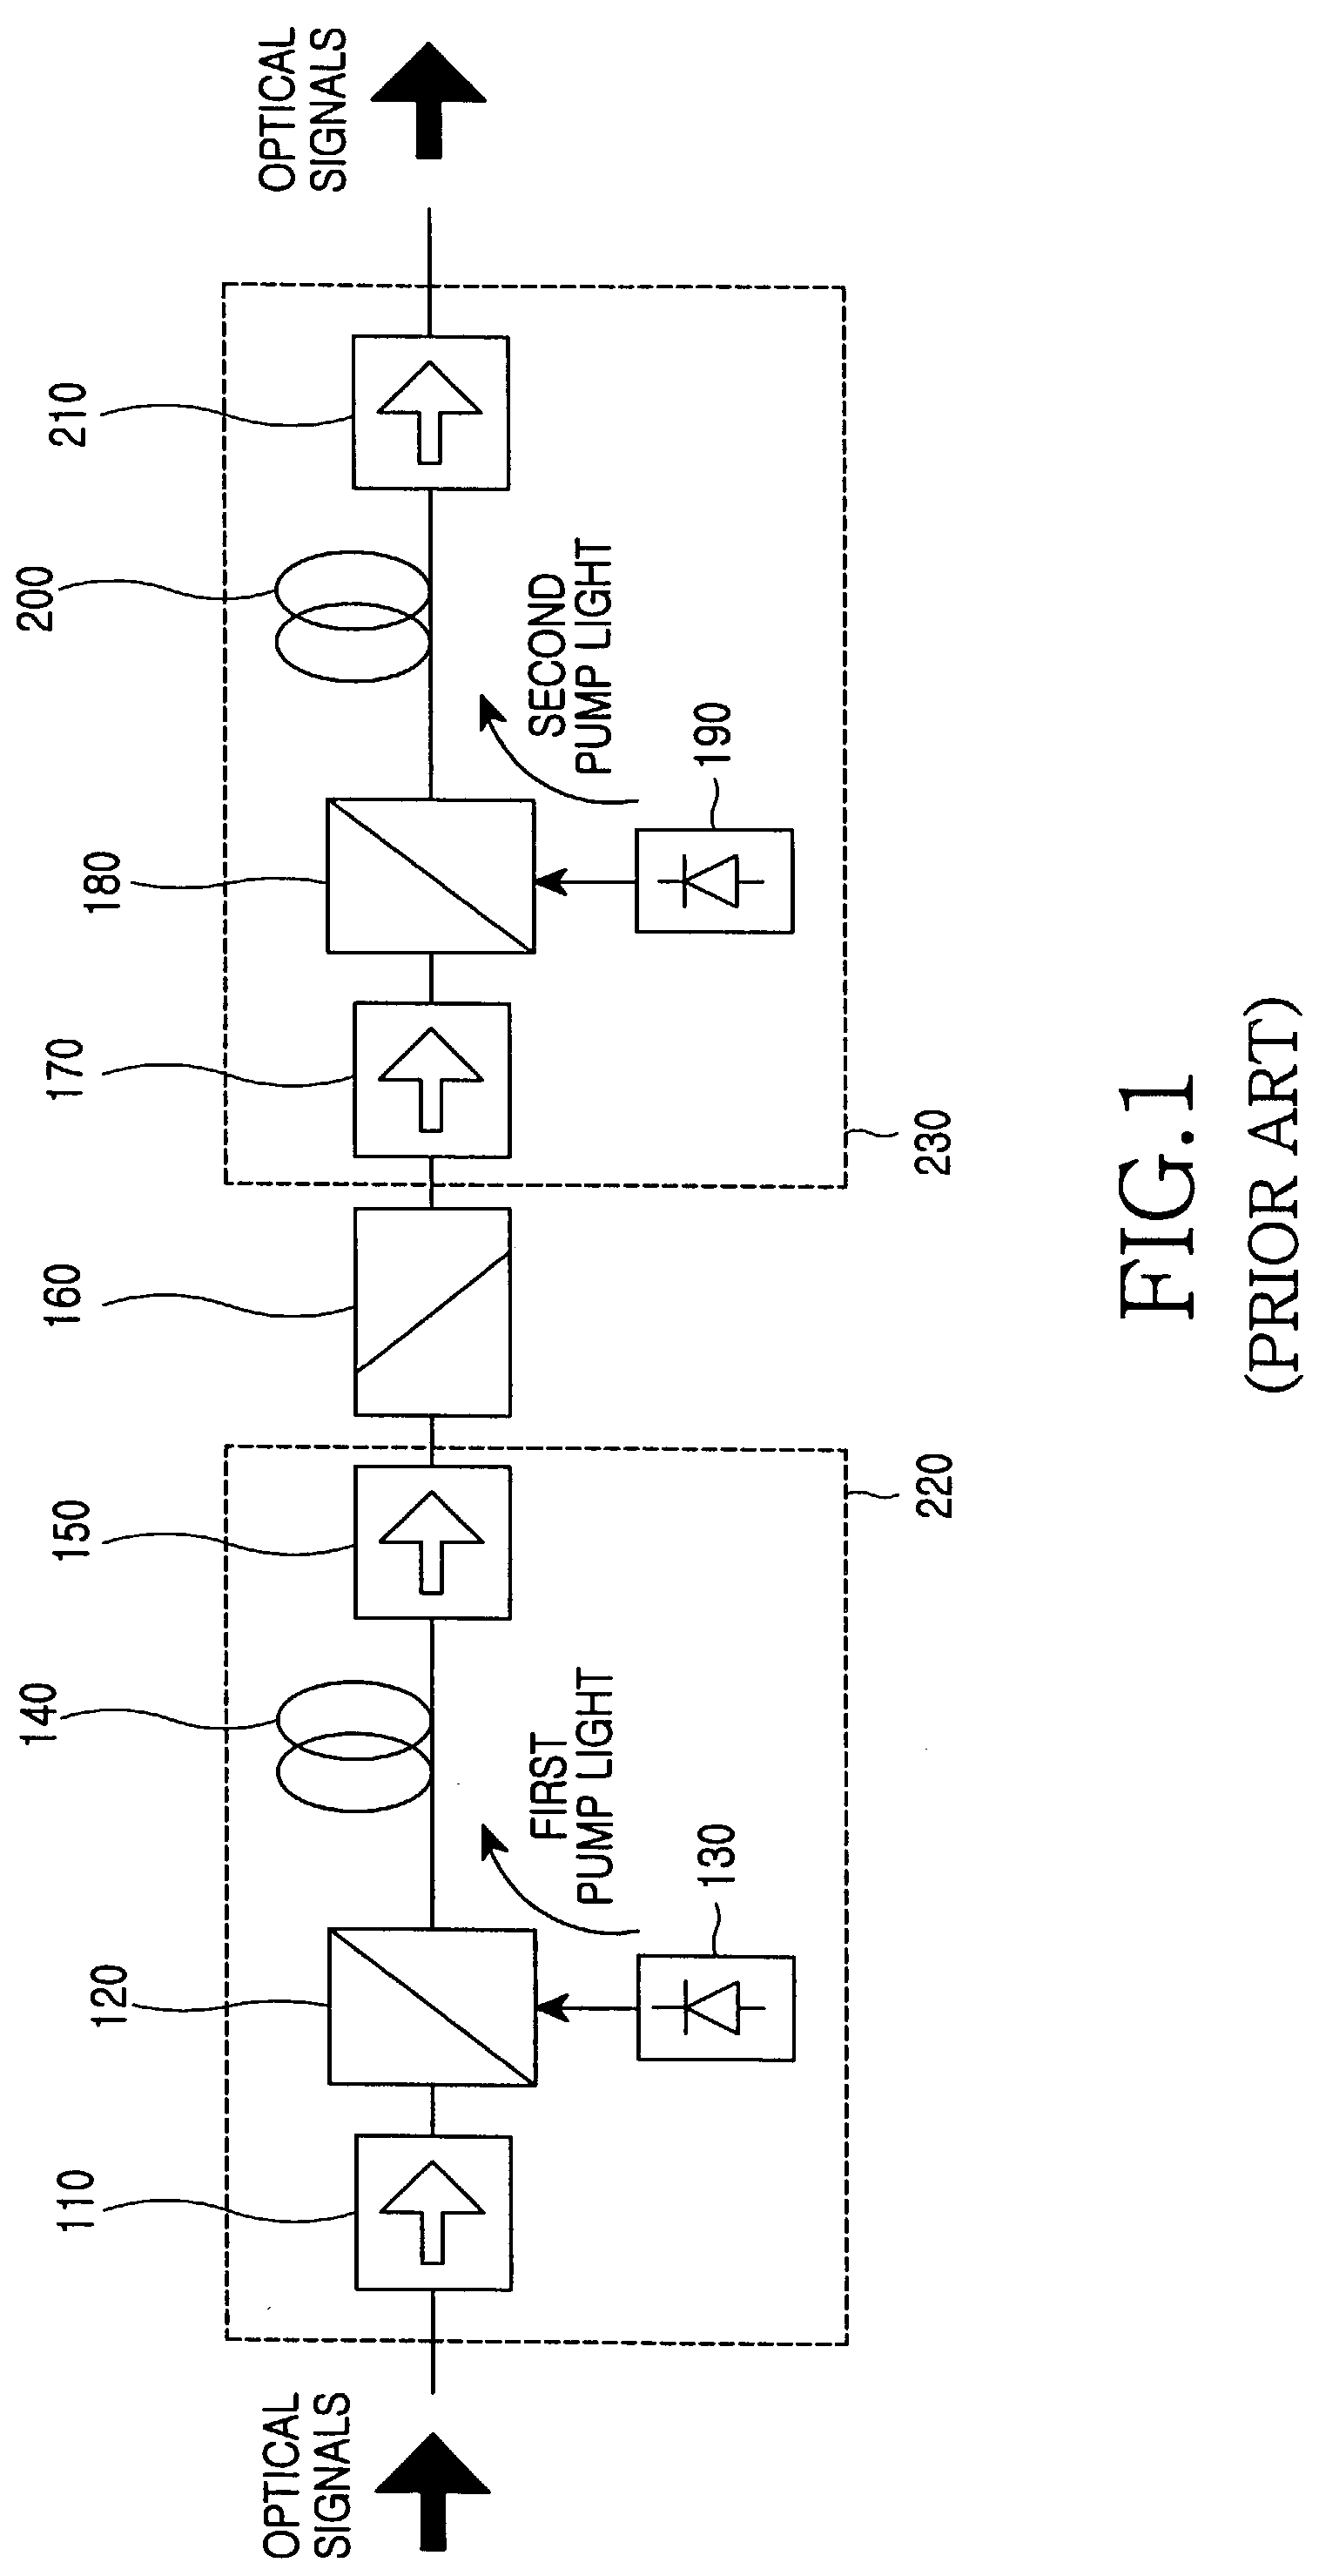 Wideband amplifier with erbium-doped fiber